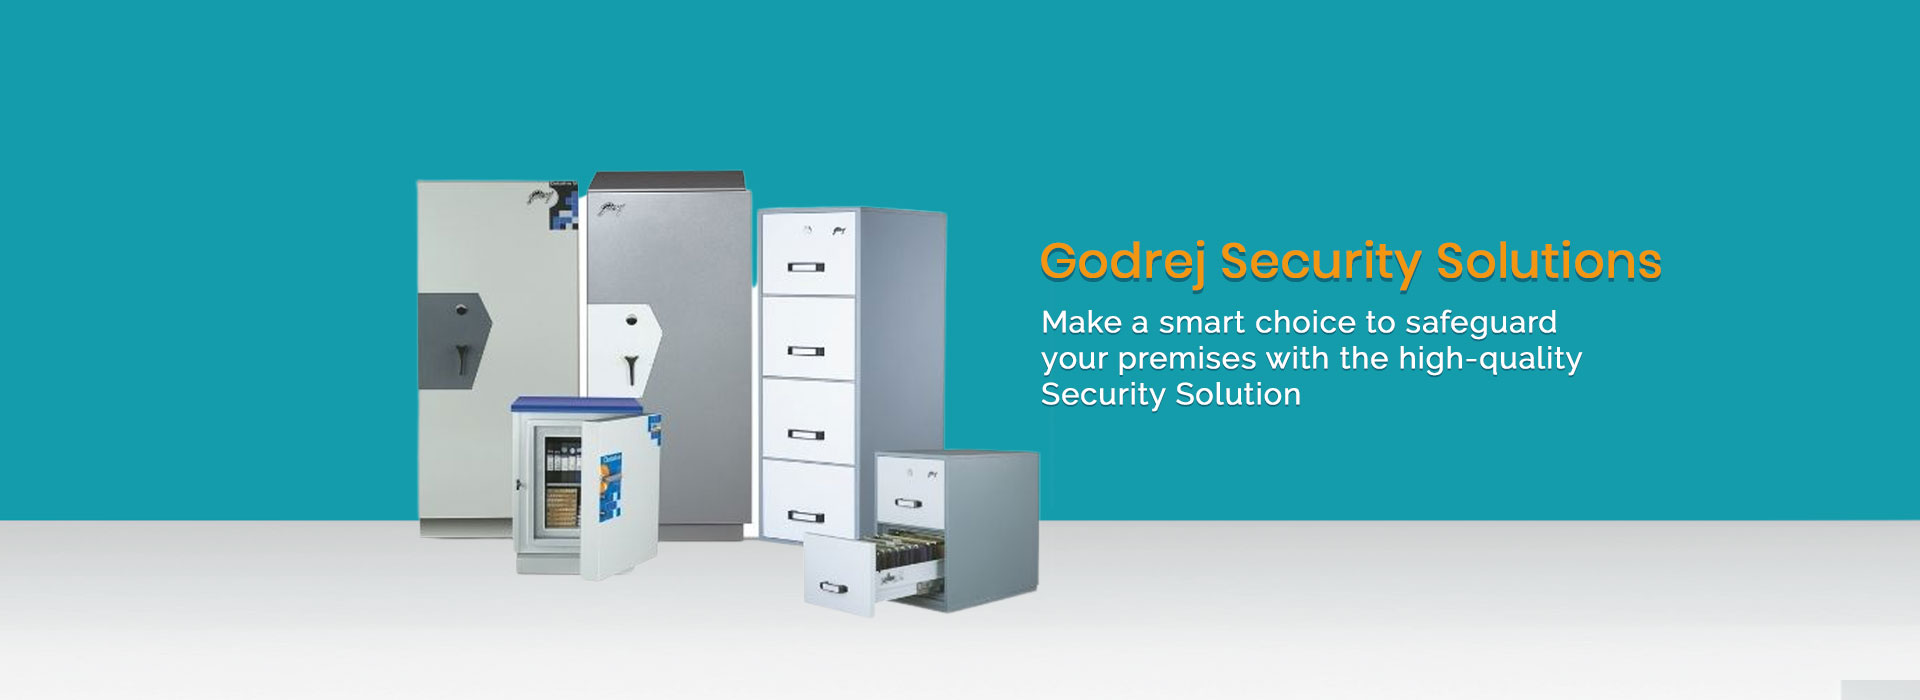 Godrej Security Solutions in Saket